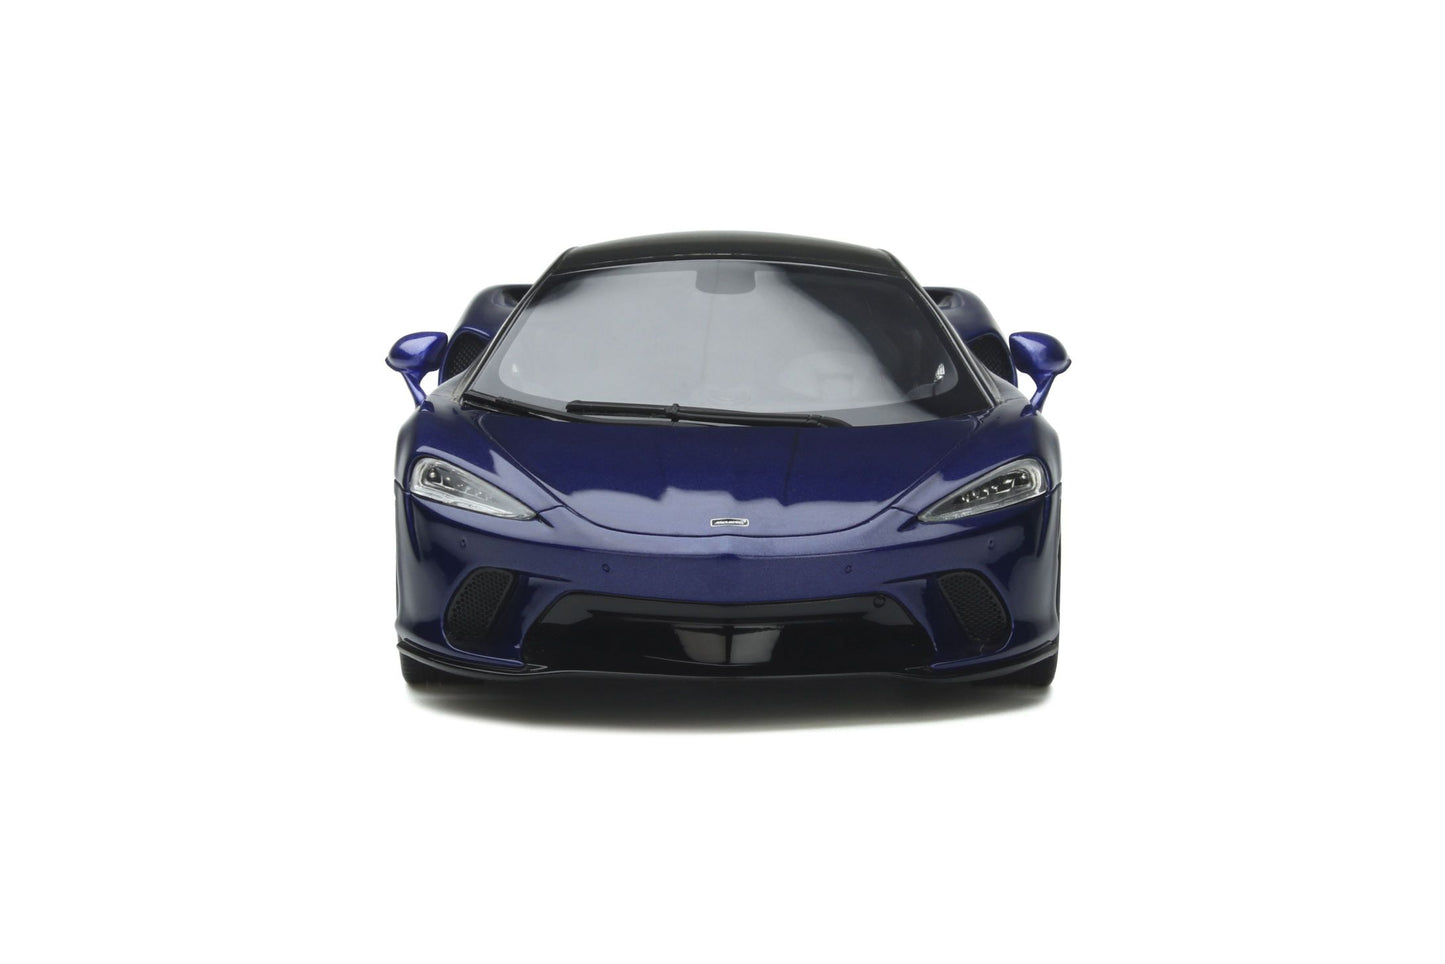 GT Spirit - McLaren GT (Blue) 1:18 Scale Model Car